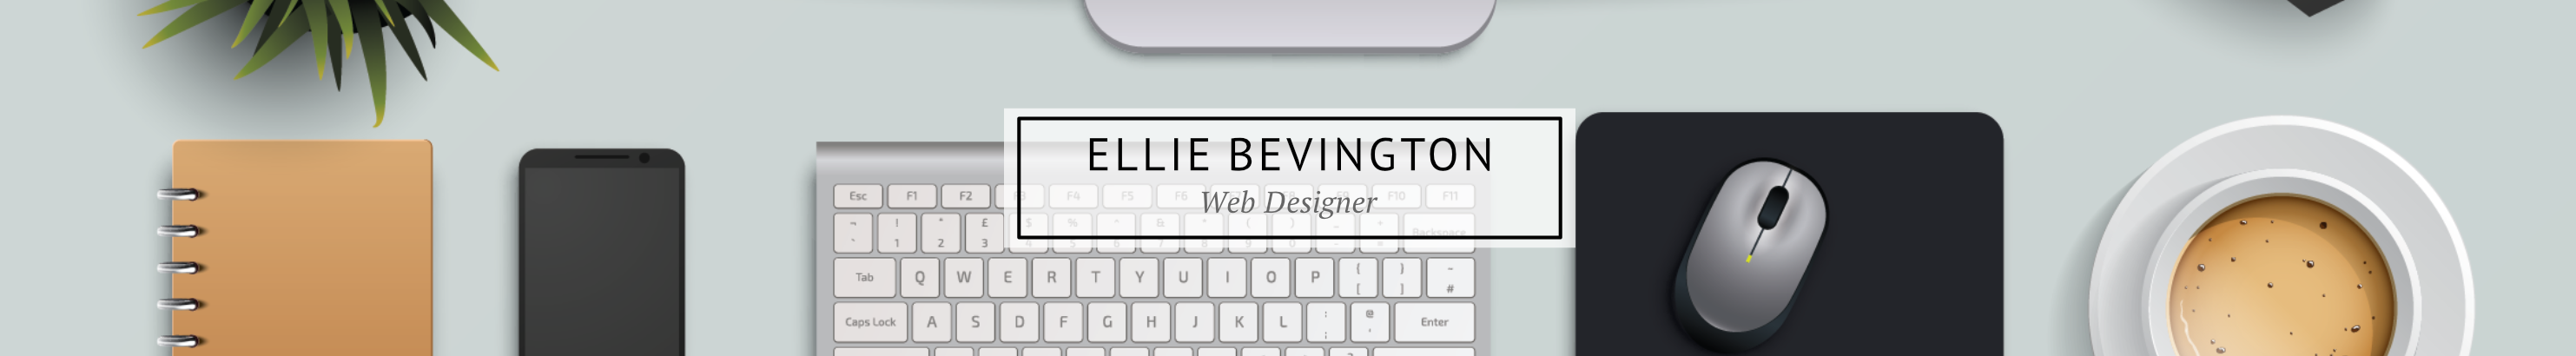 Ellie Bevington's profile banner